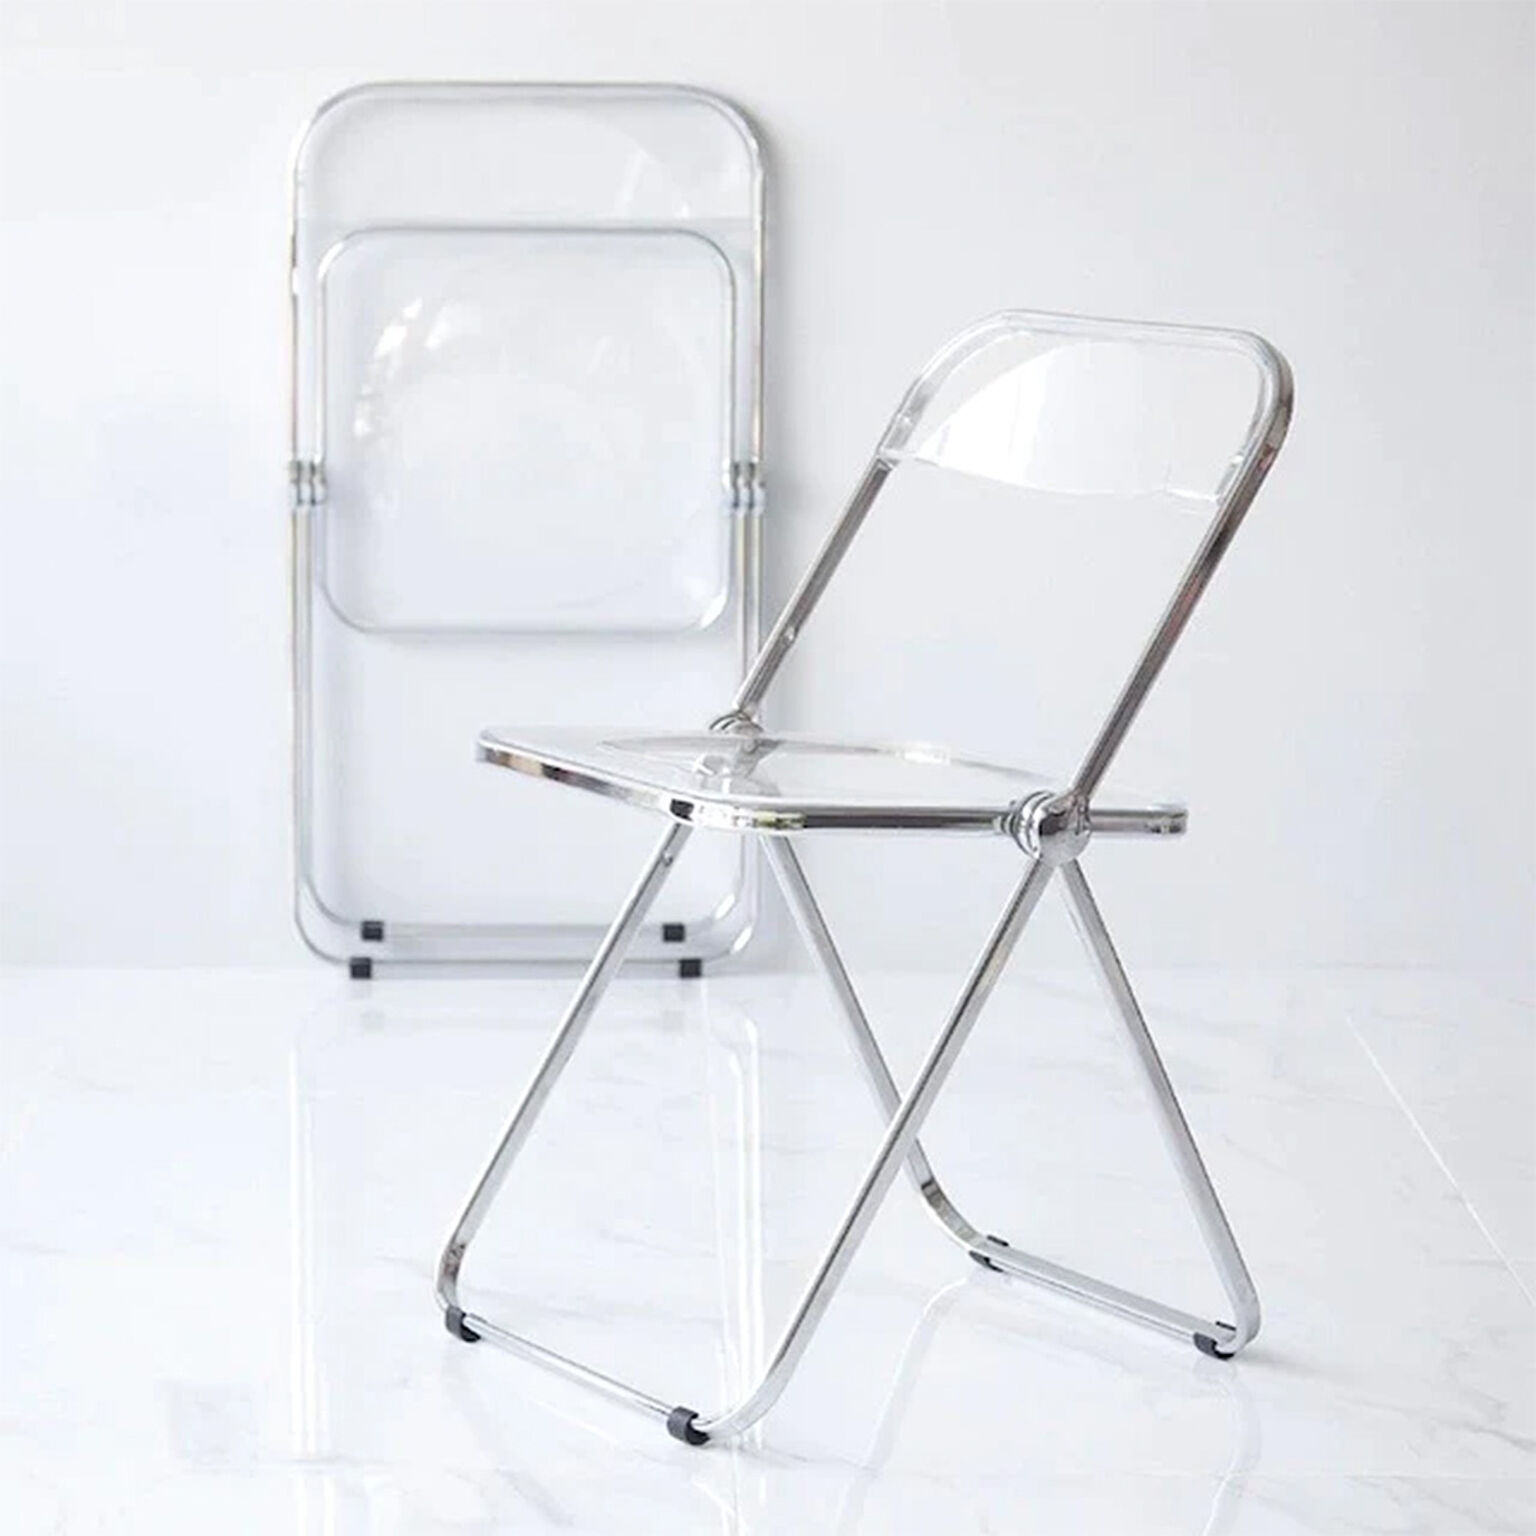 【Bauhaus Japan】Clear modern chair/折りたたみ椅子/ダイニングチェア/デスクチェア/クリアチェア